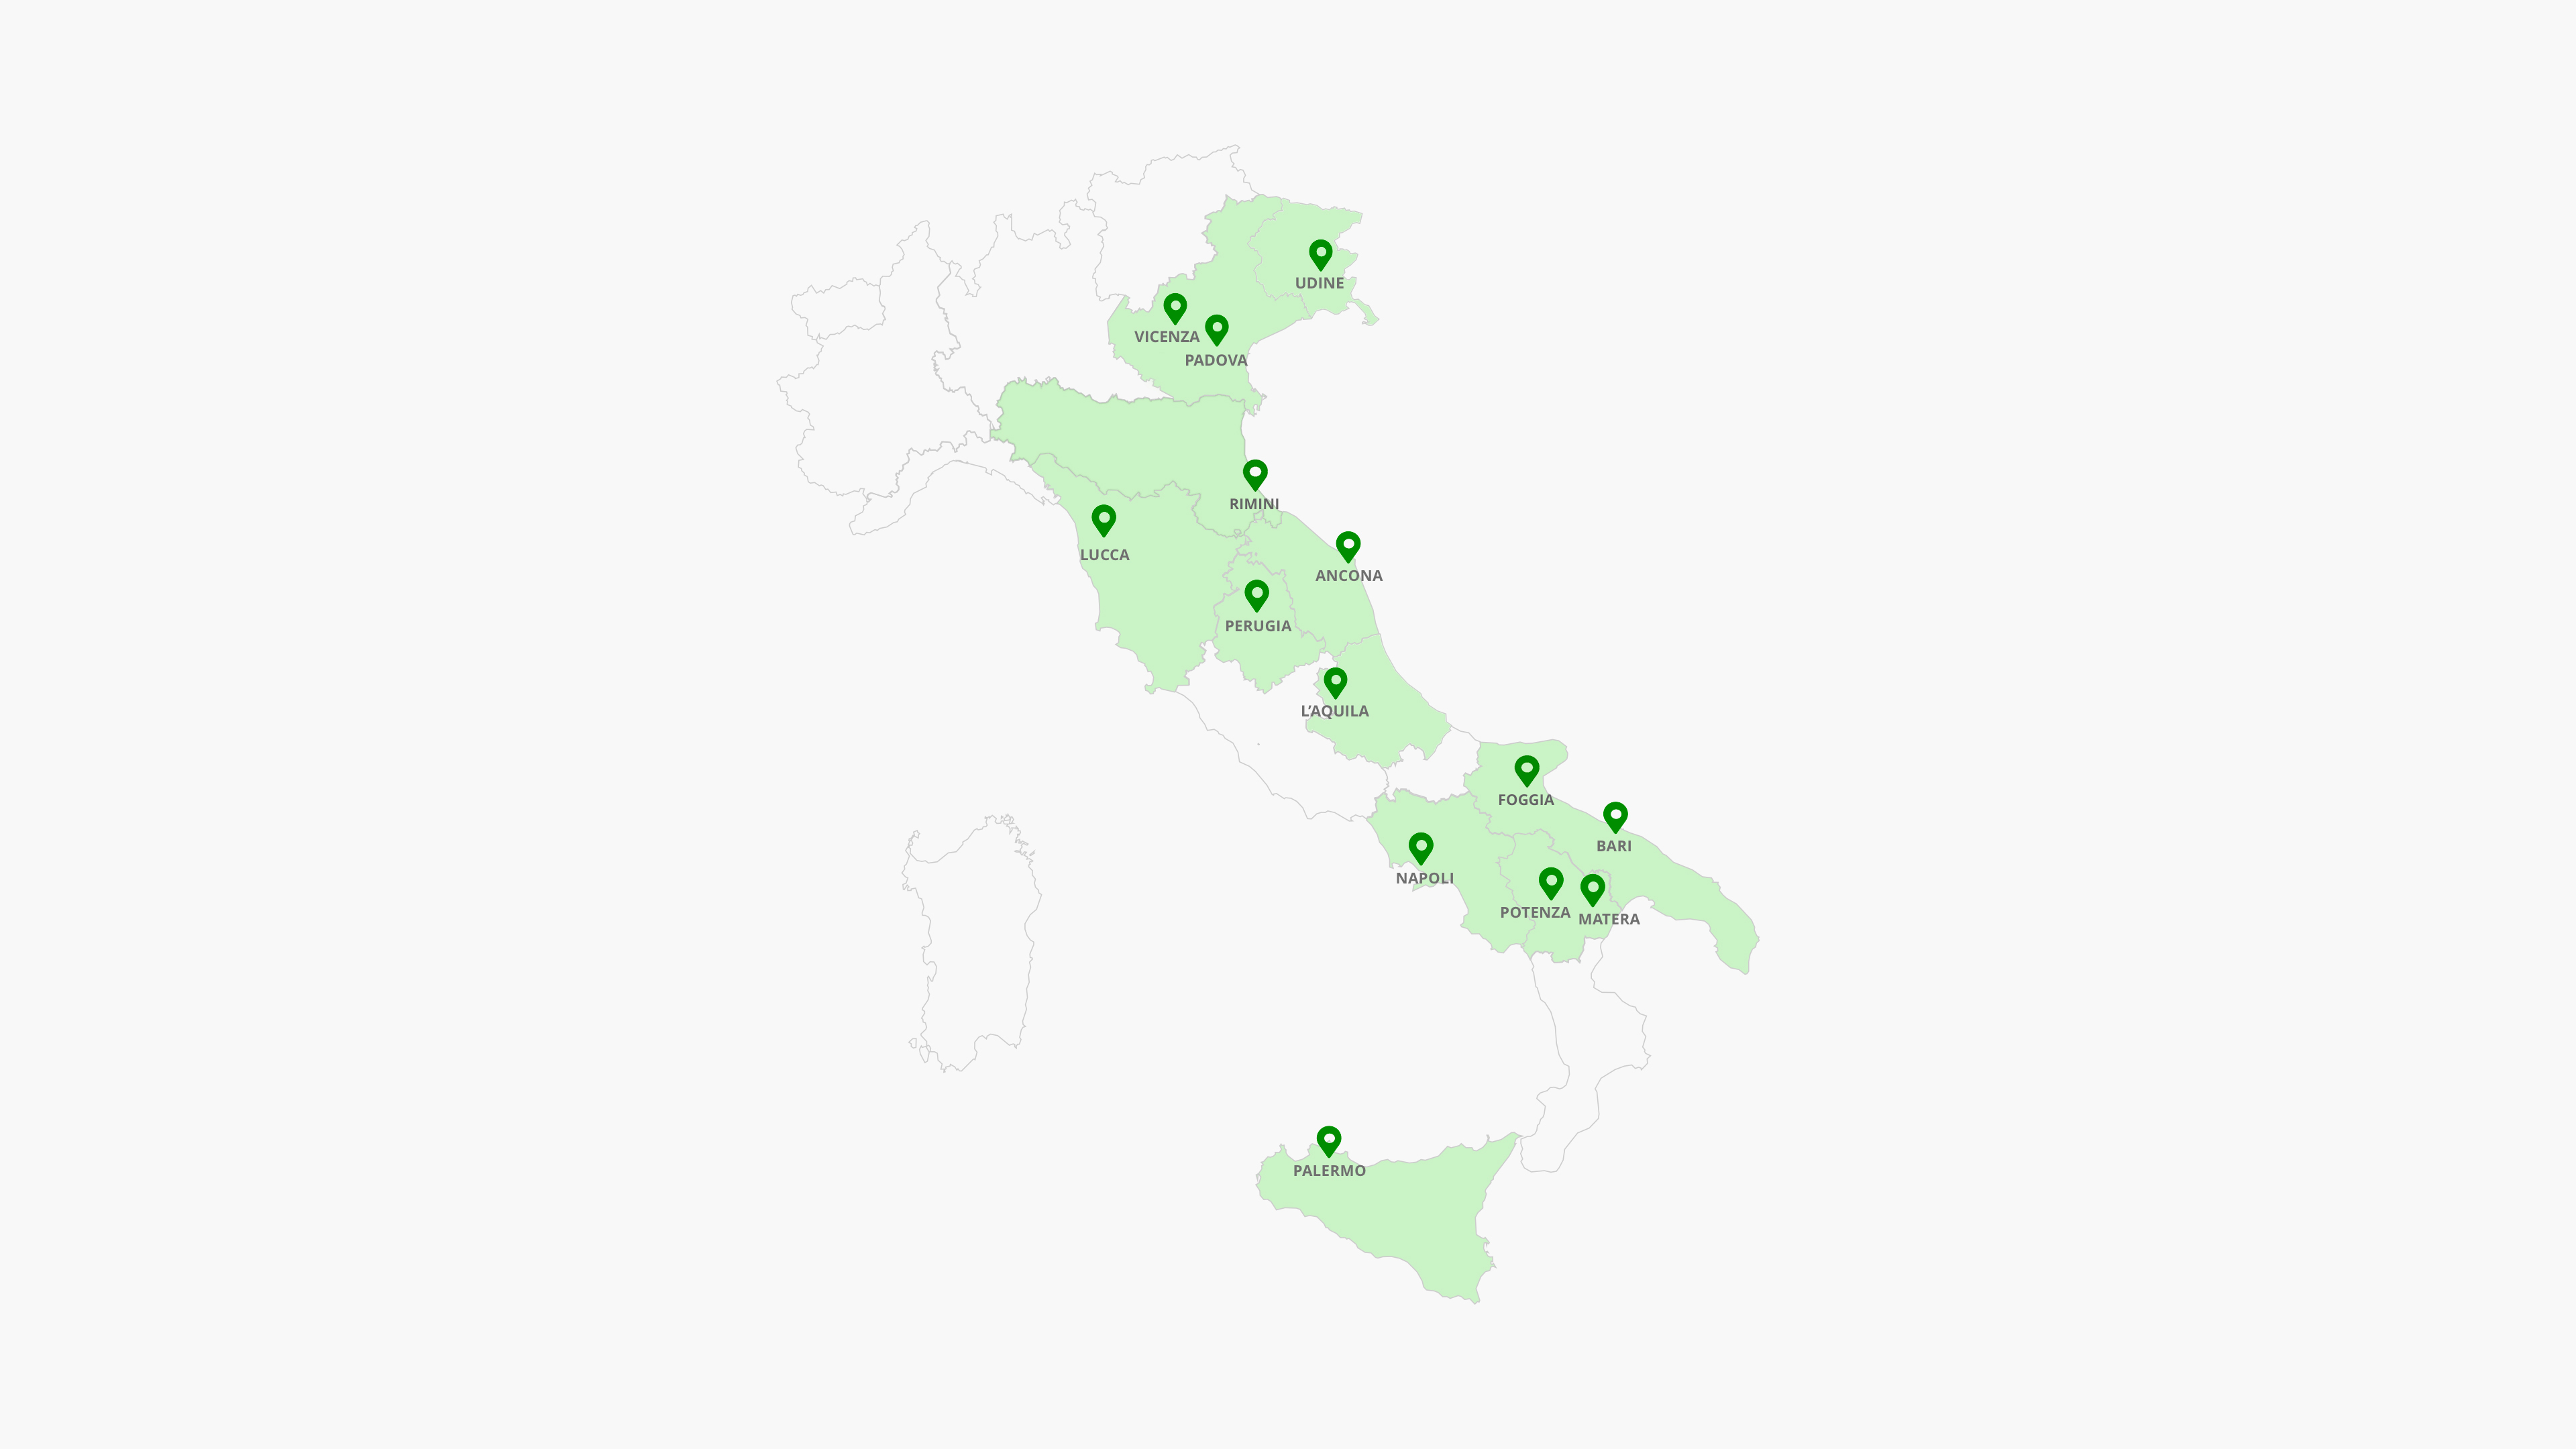 Recovering In-date medicines is running in Udine, Vicenza, Padua, Lucca, Perugia, Ancona, L’aquila, Naples, Bari, Potenza, Matera, Palermo, Foggia e Rimini